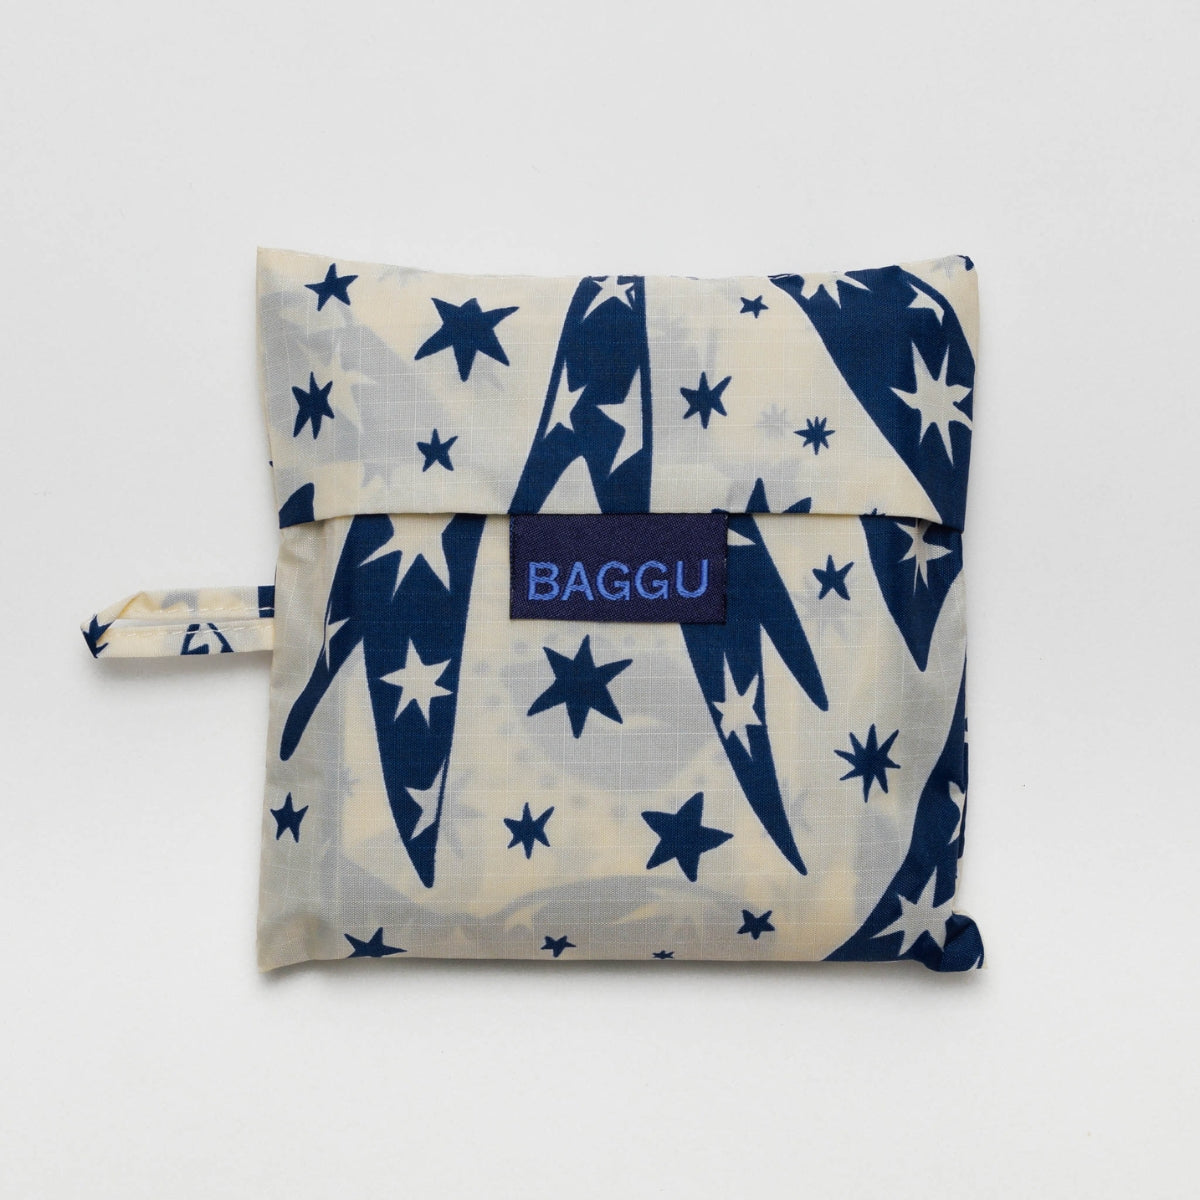 Baggu Standard Bag in Cherub Bows